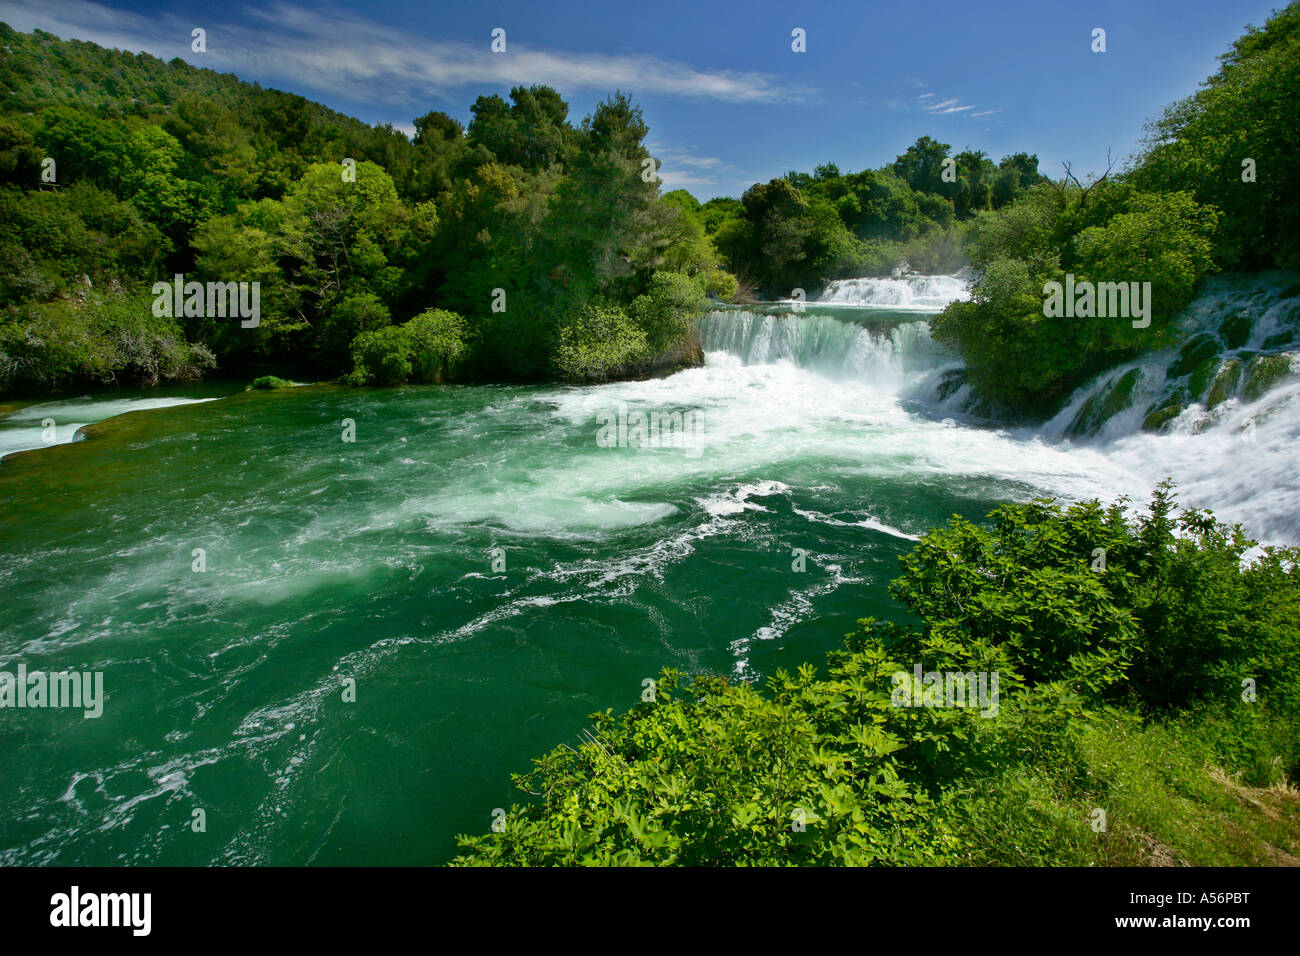 Kaskaden des Skradinski Buk Krka Nationalpark Fernsehreihe Wasserfälle Skradinski Buk Krka Nationalpark Kroatien Stockfoto